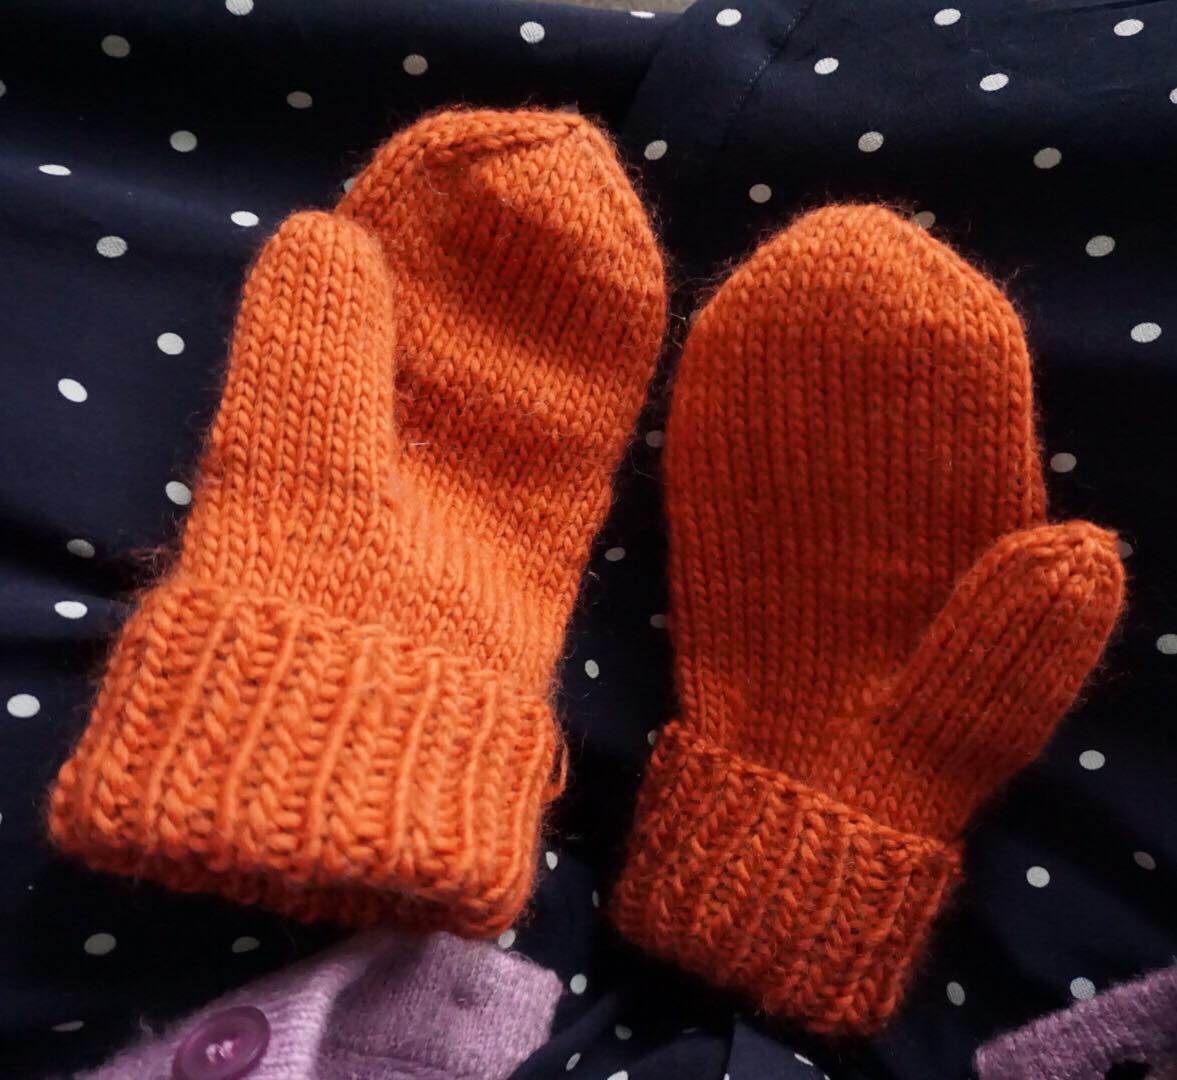 strikkeoppskrift enkle votter - Stay warm mittens | Knitting kit mittens - by HipKnitShop - 23/10/2018